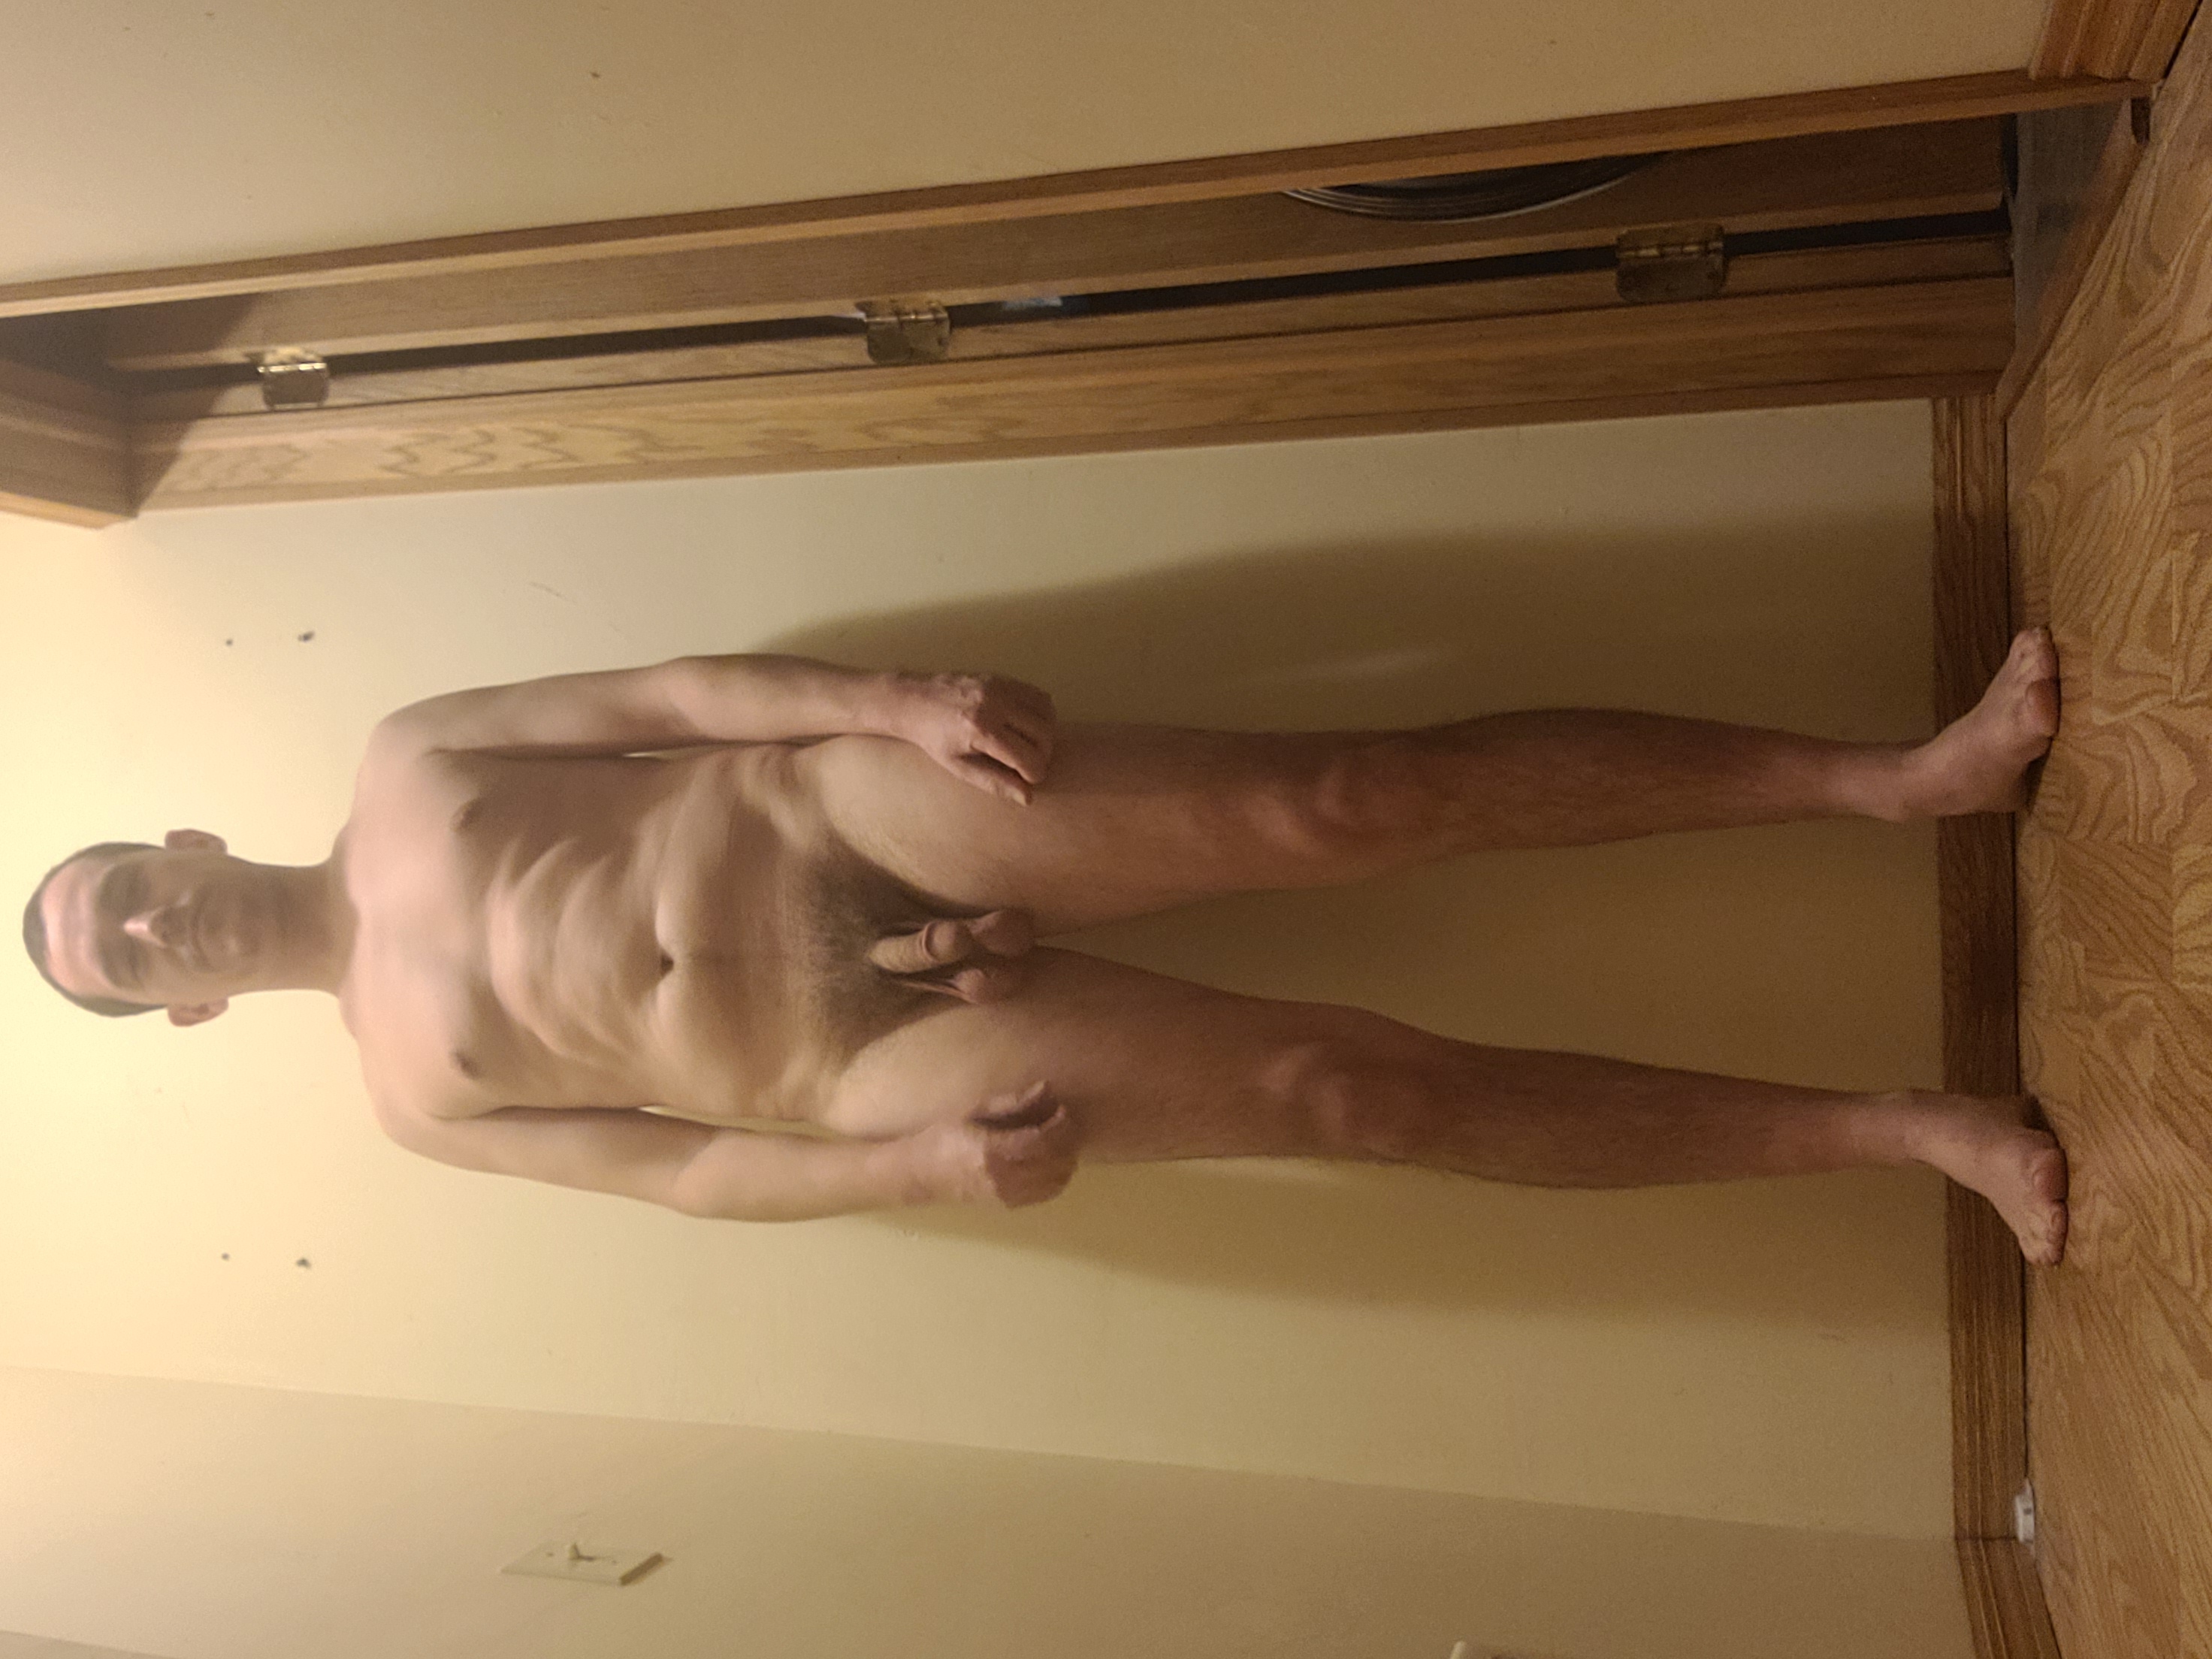 Naked Guy